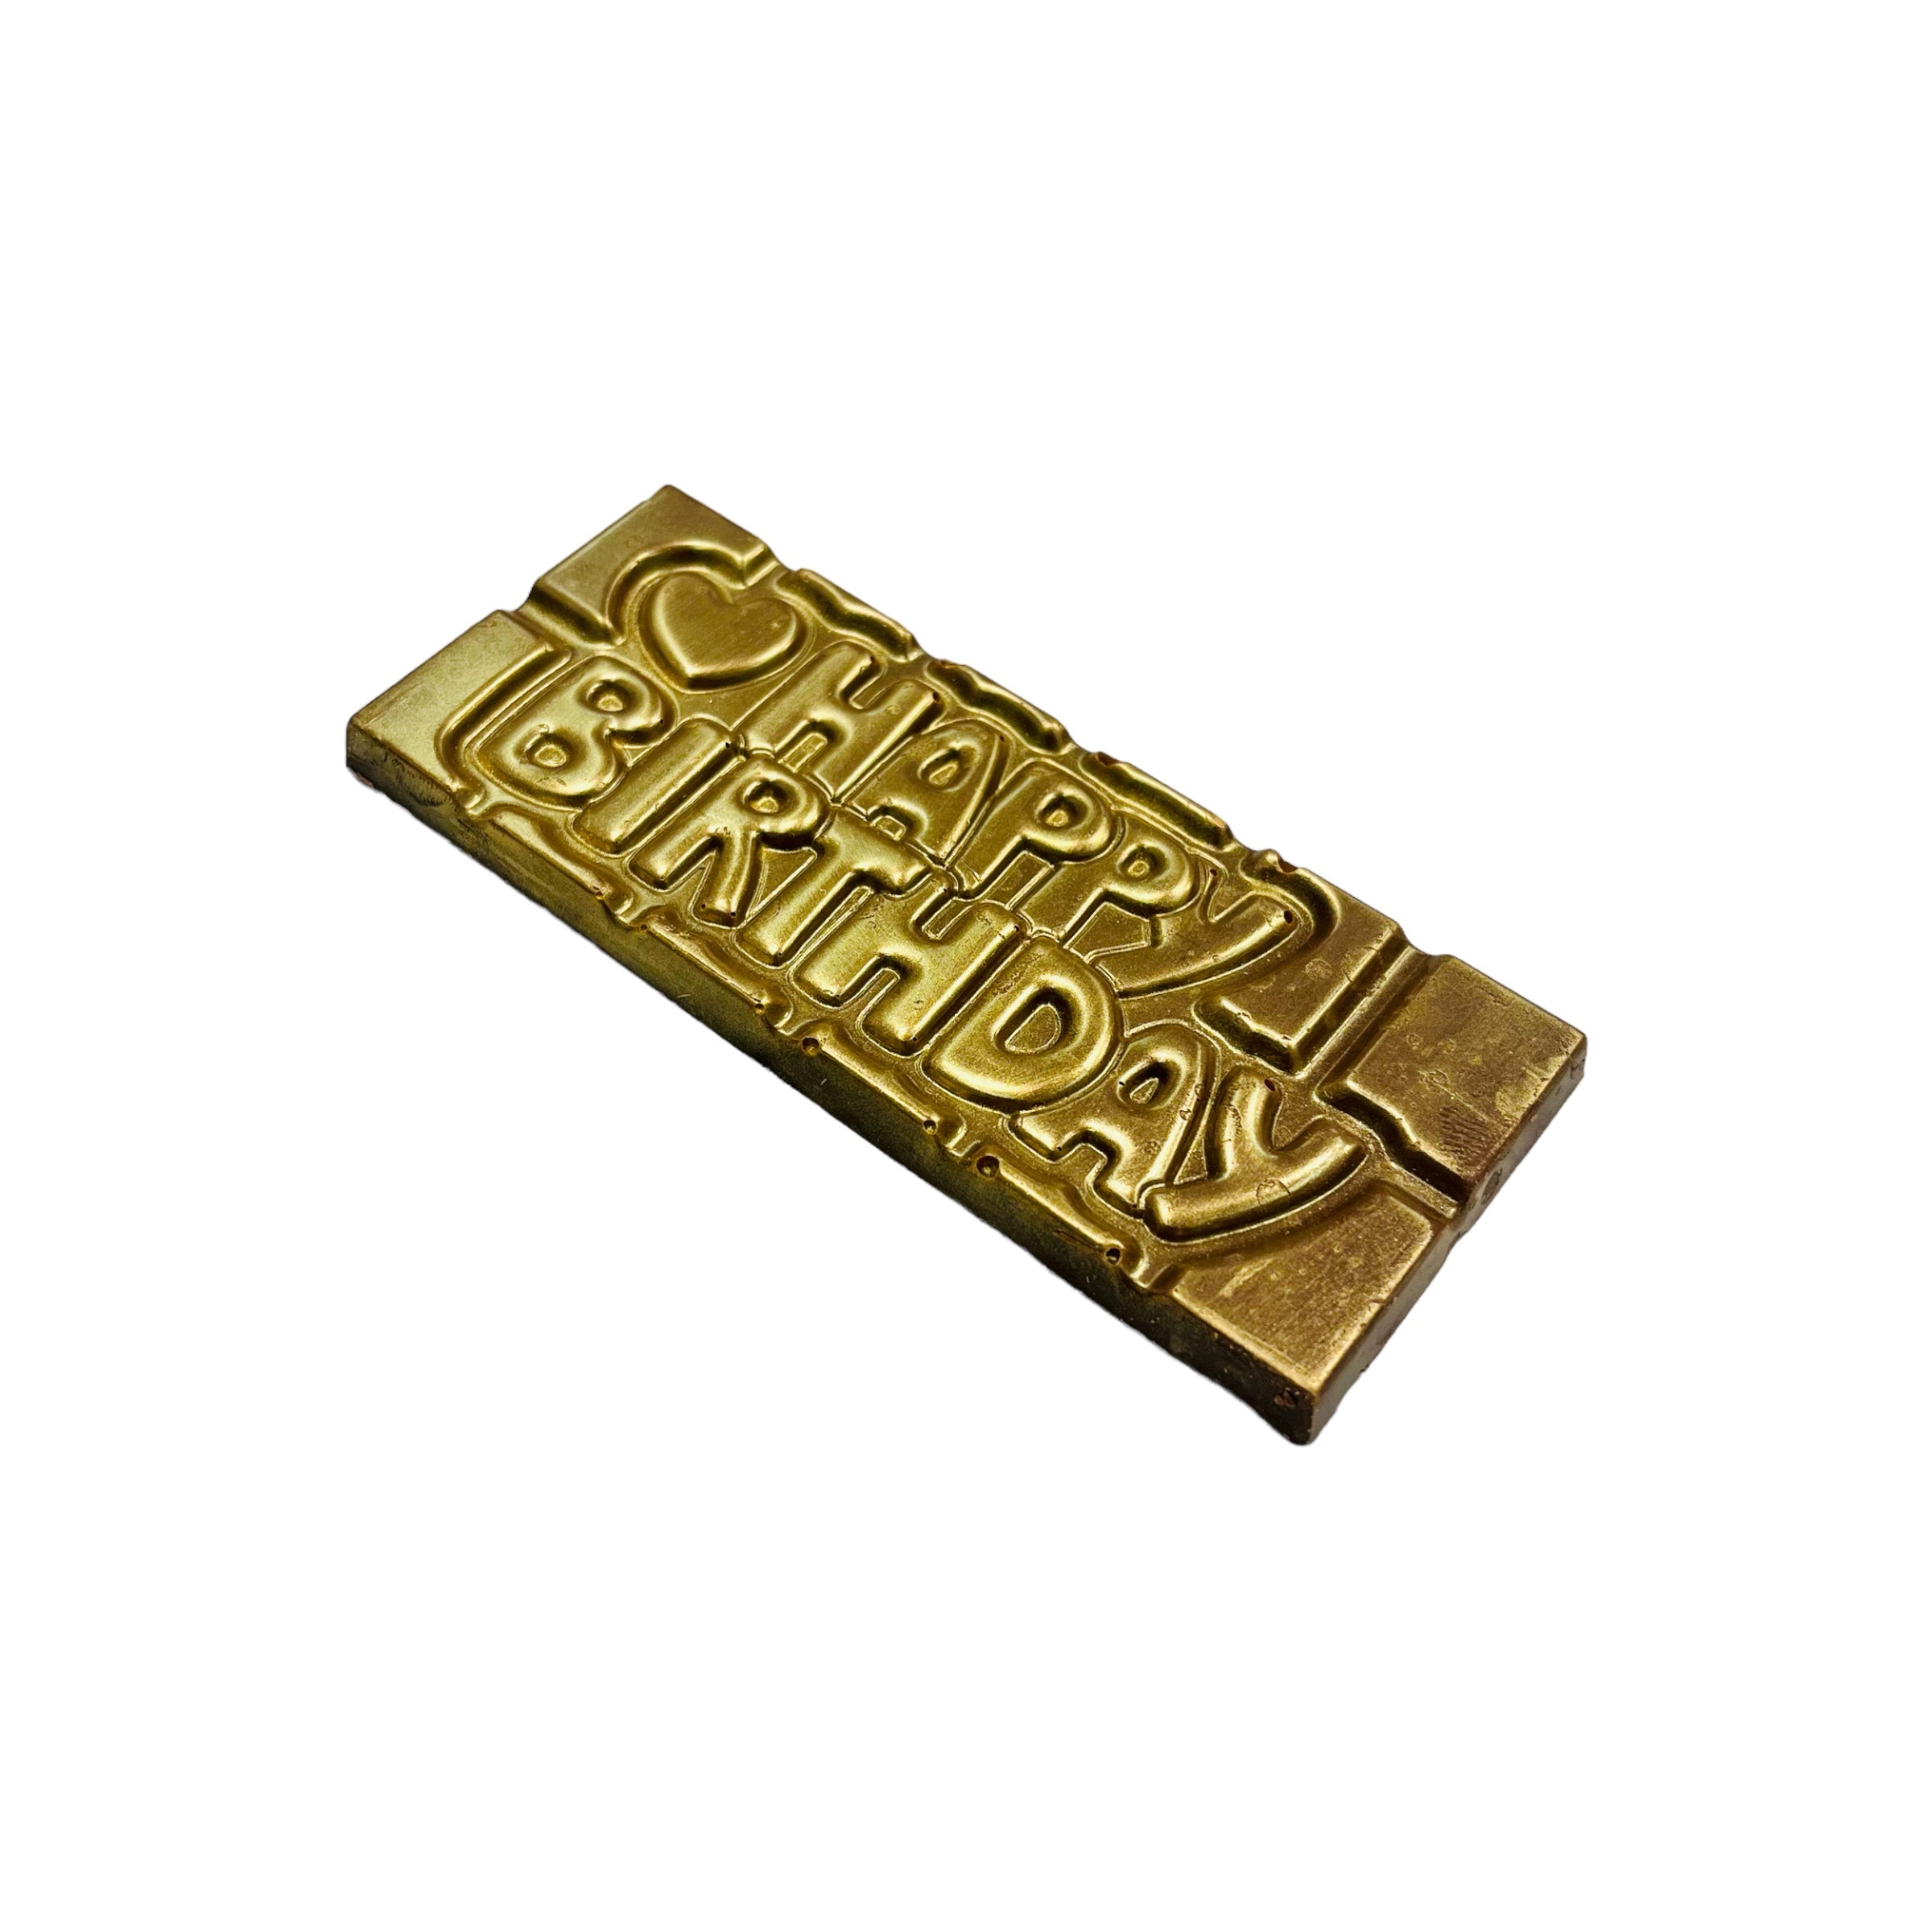 'Happy Birthday' Chocolate Bar